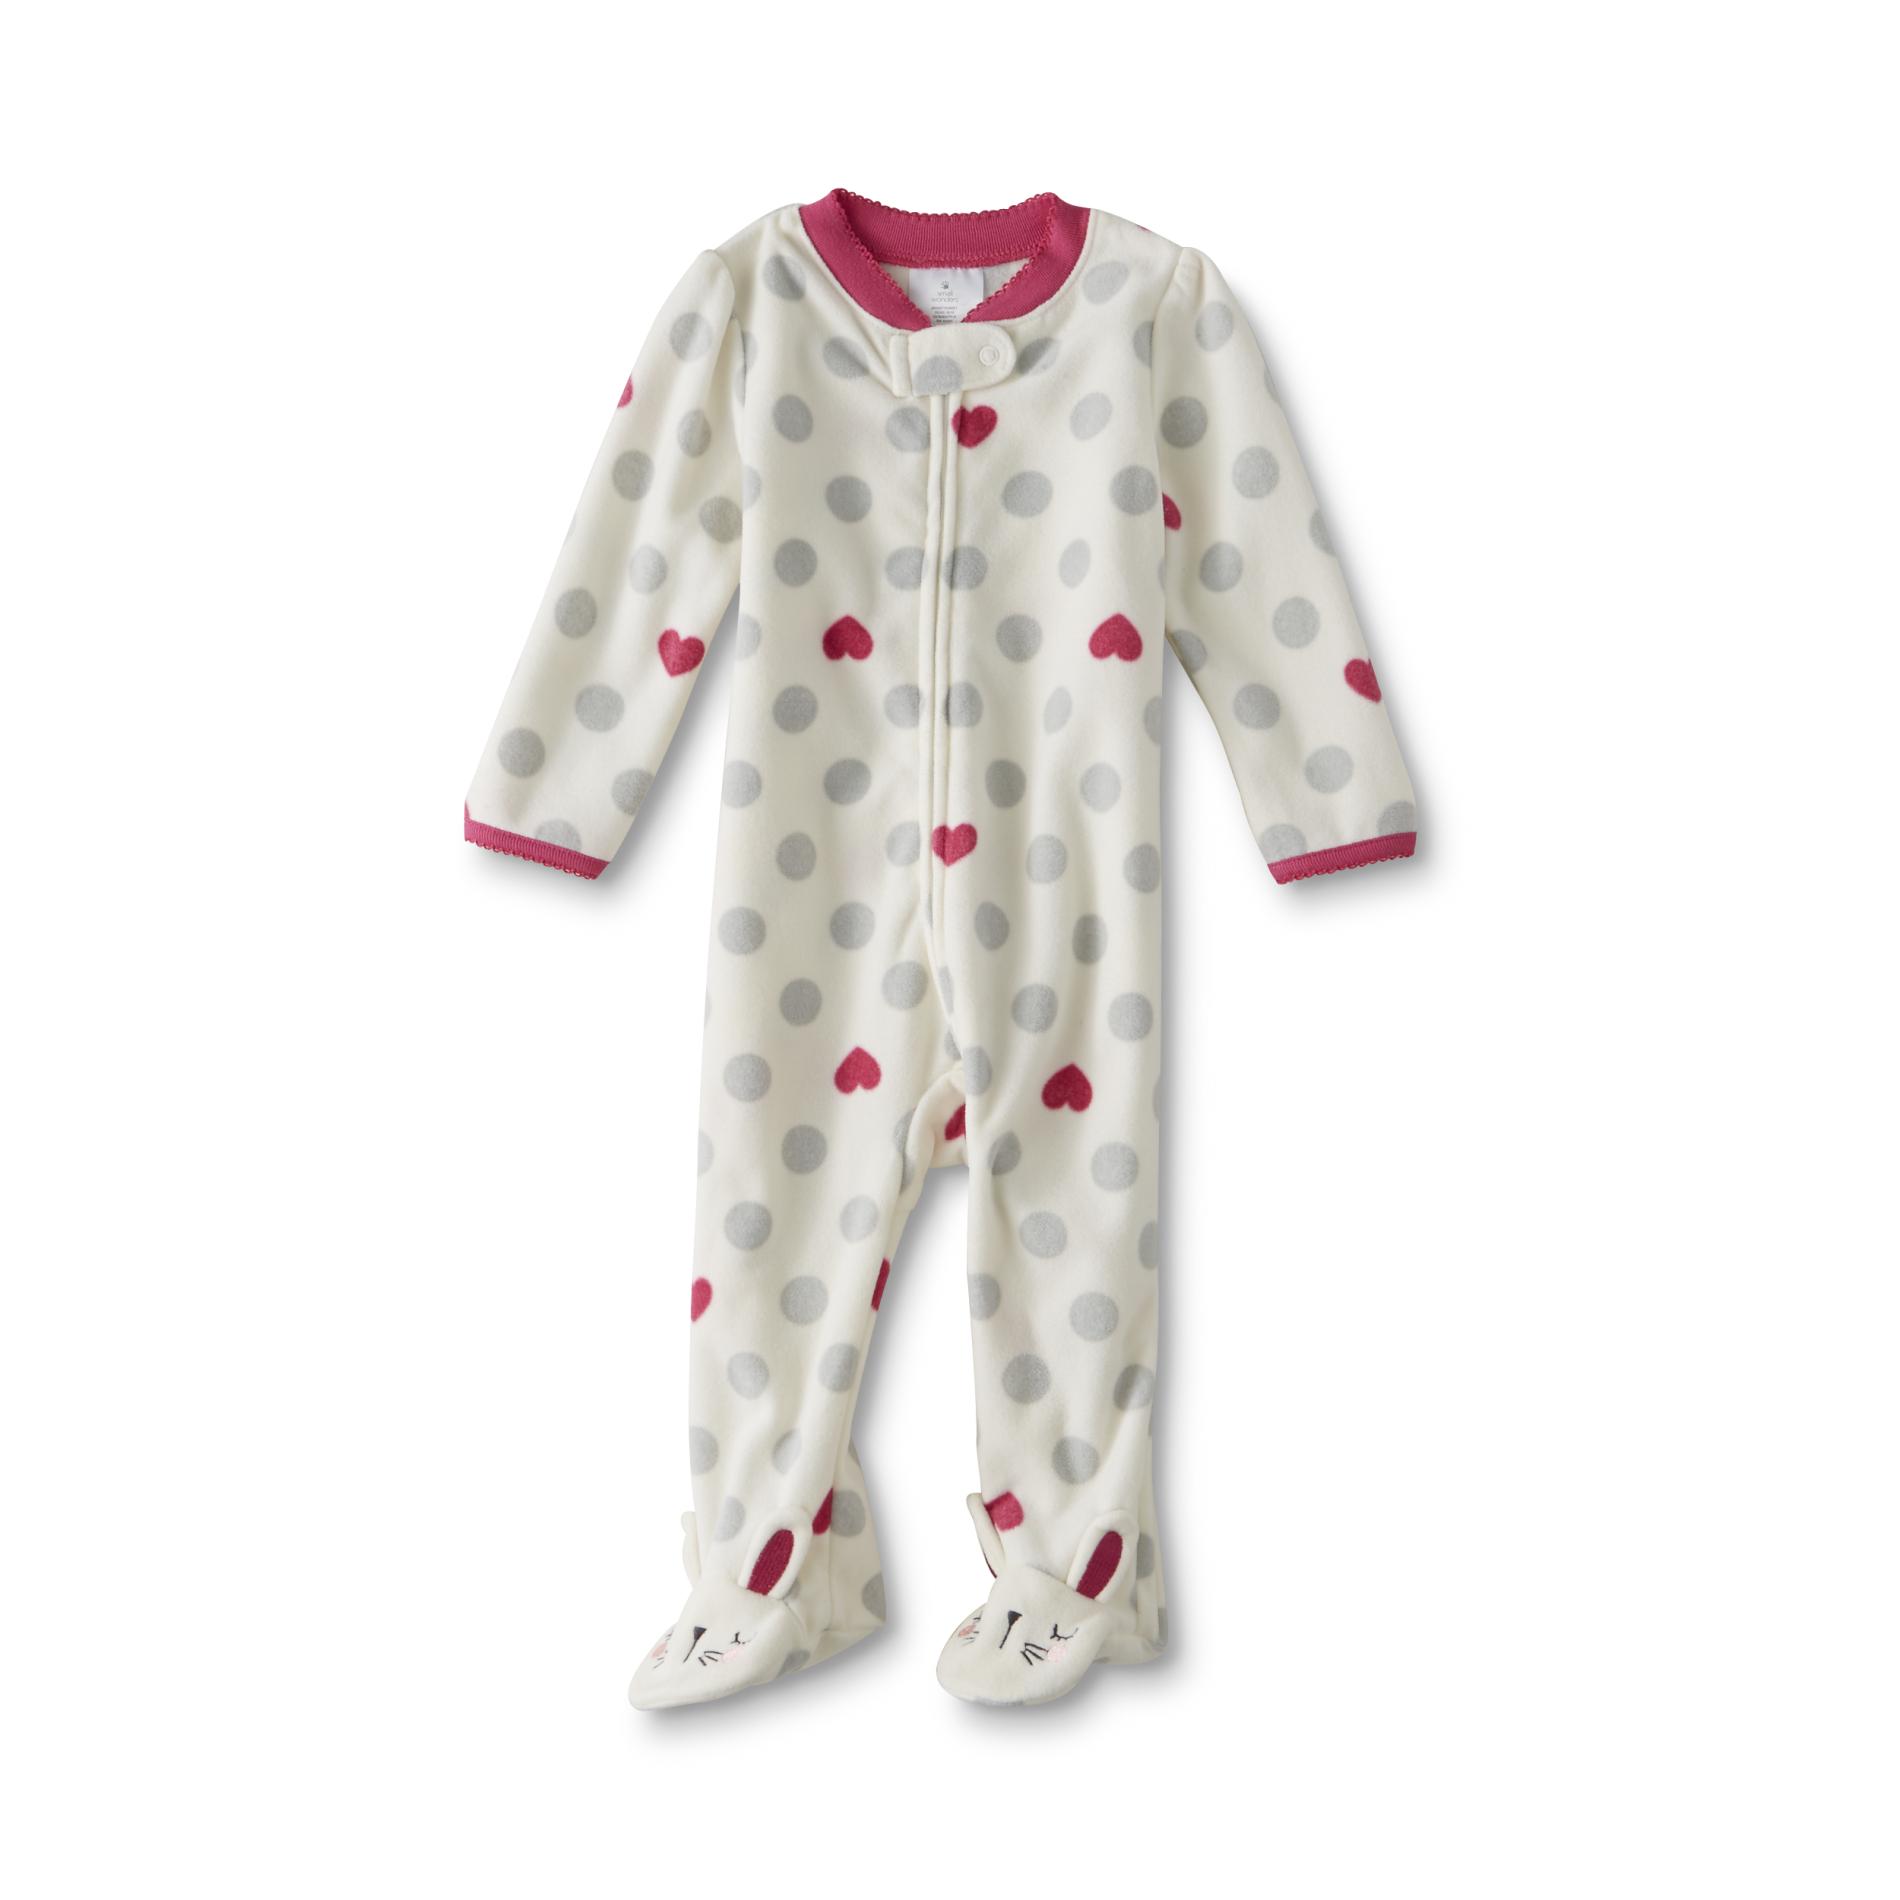 Small Wonders Newborn Girl's Sleeper Pajamas - Polka Dots